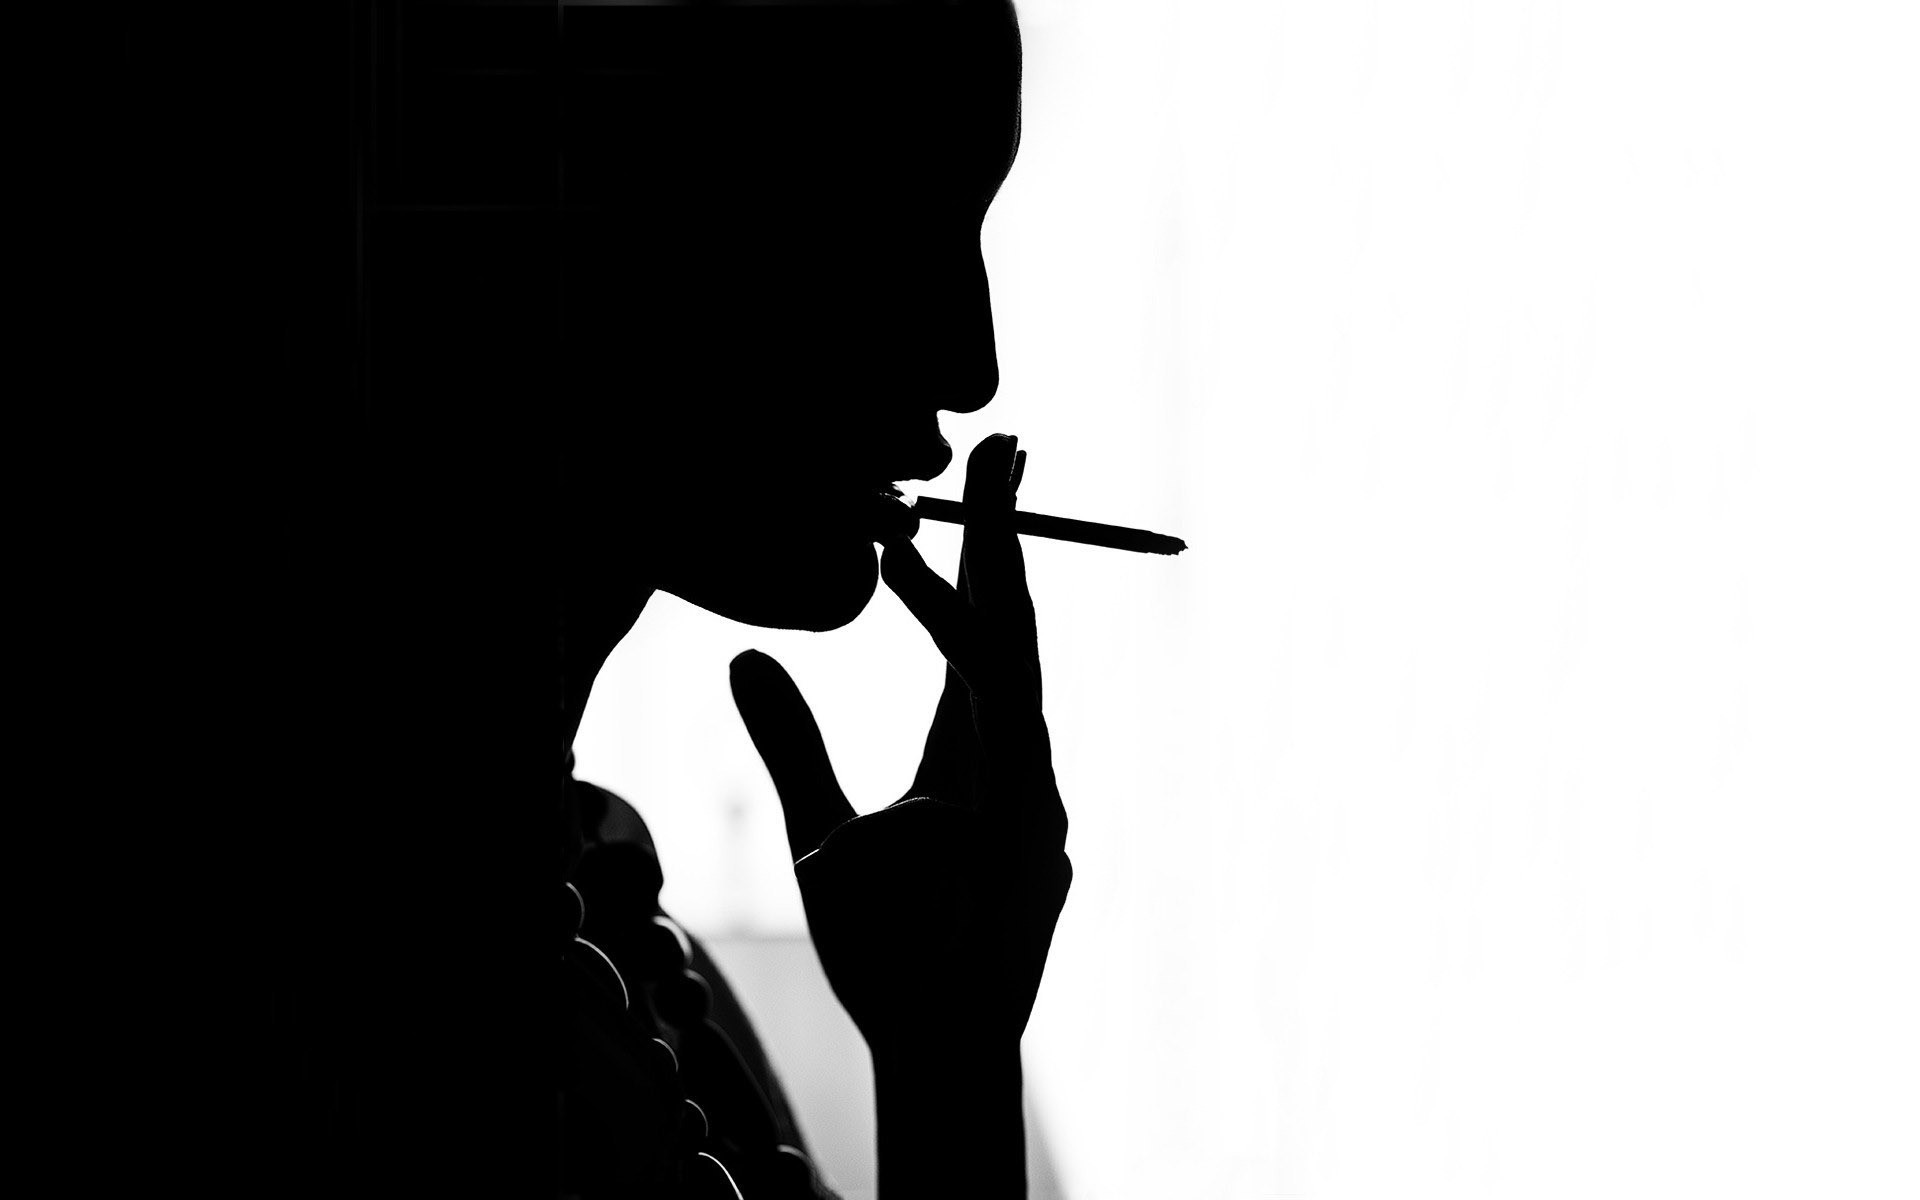 Аватарки курящие. Женщина с сигаретой. Силуэт курящей девушки. Девушка с сигарой. Силуэт женщины с сигаретой.